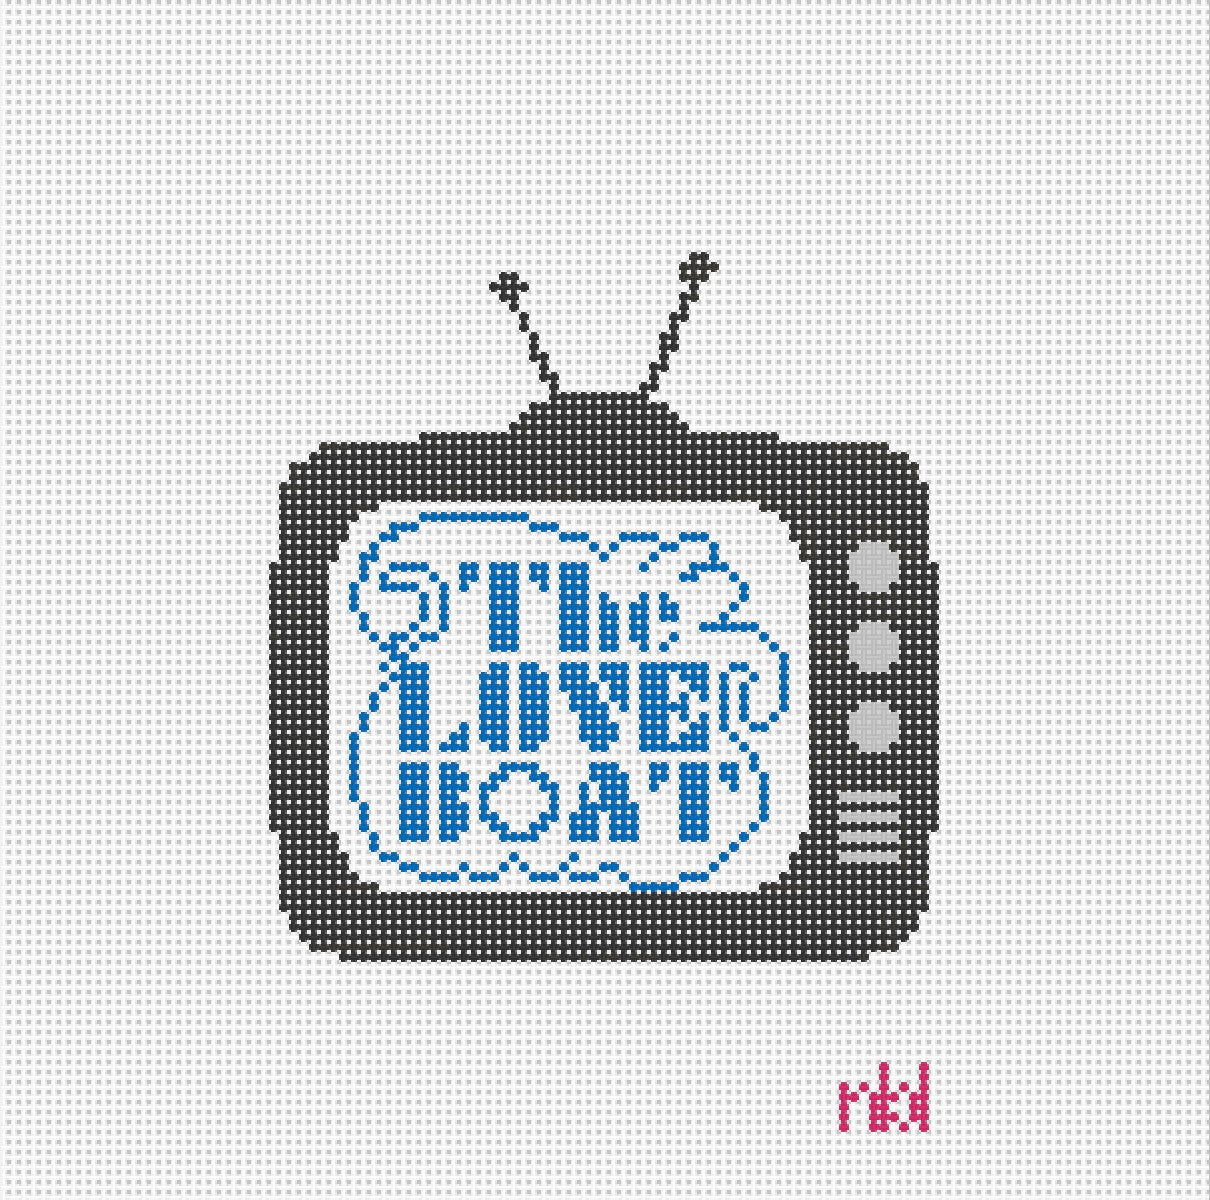 Retro TV Needlepoint Canvas Love Boat - Needlepoint by Laura